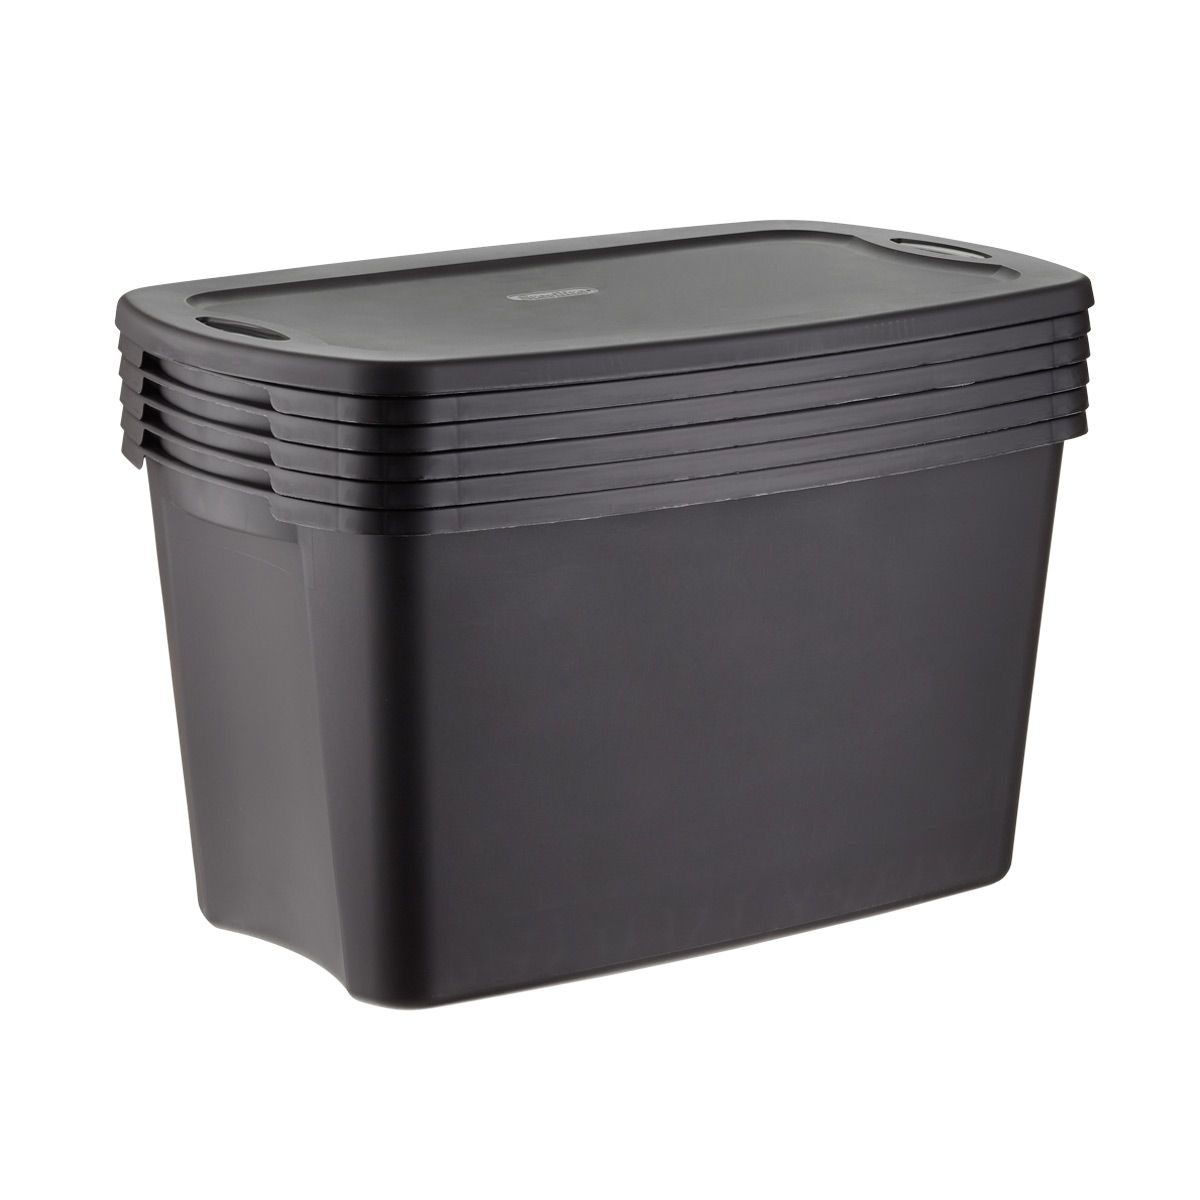 Case of 6 - 30 Gallon Tote Box | The Container Store